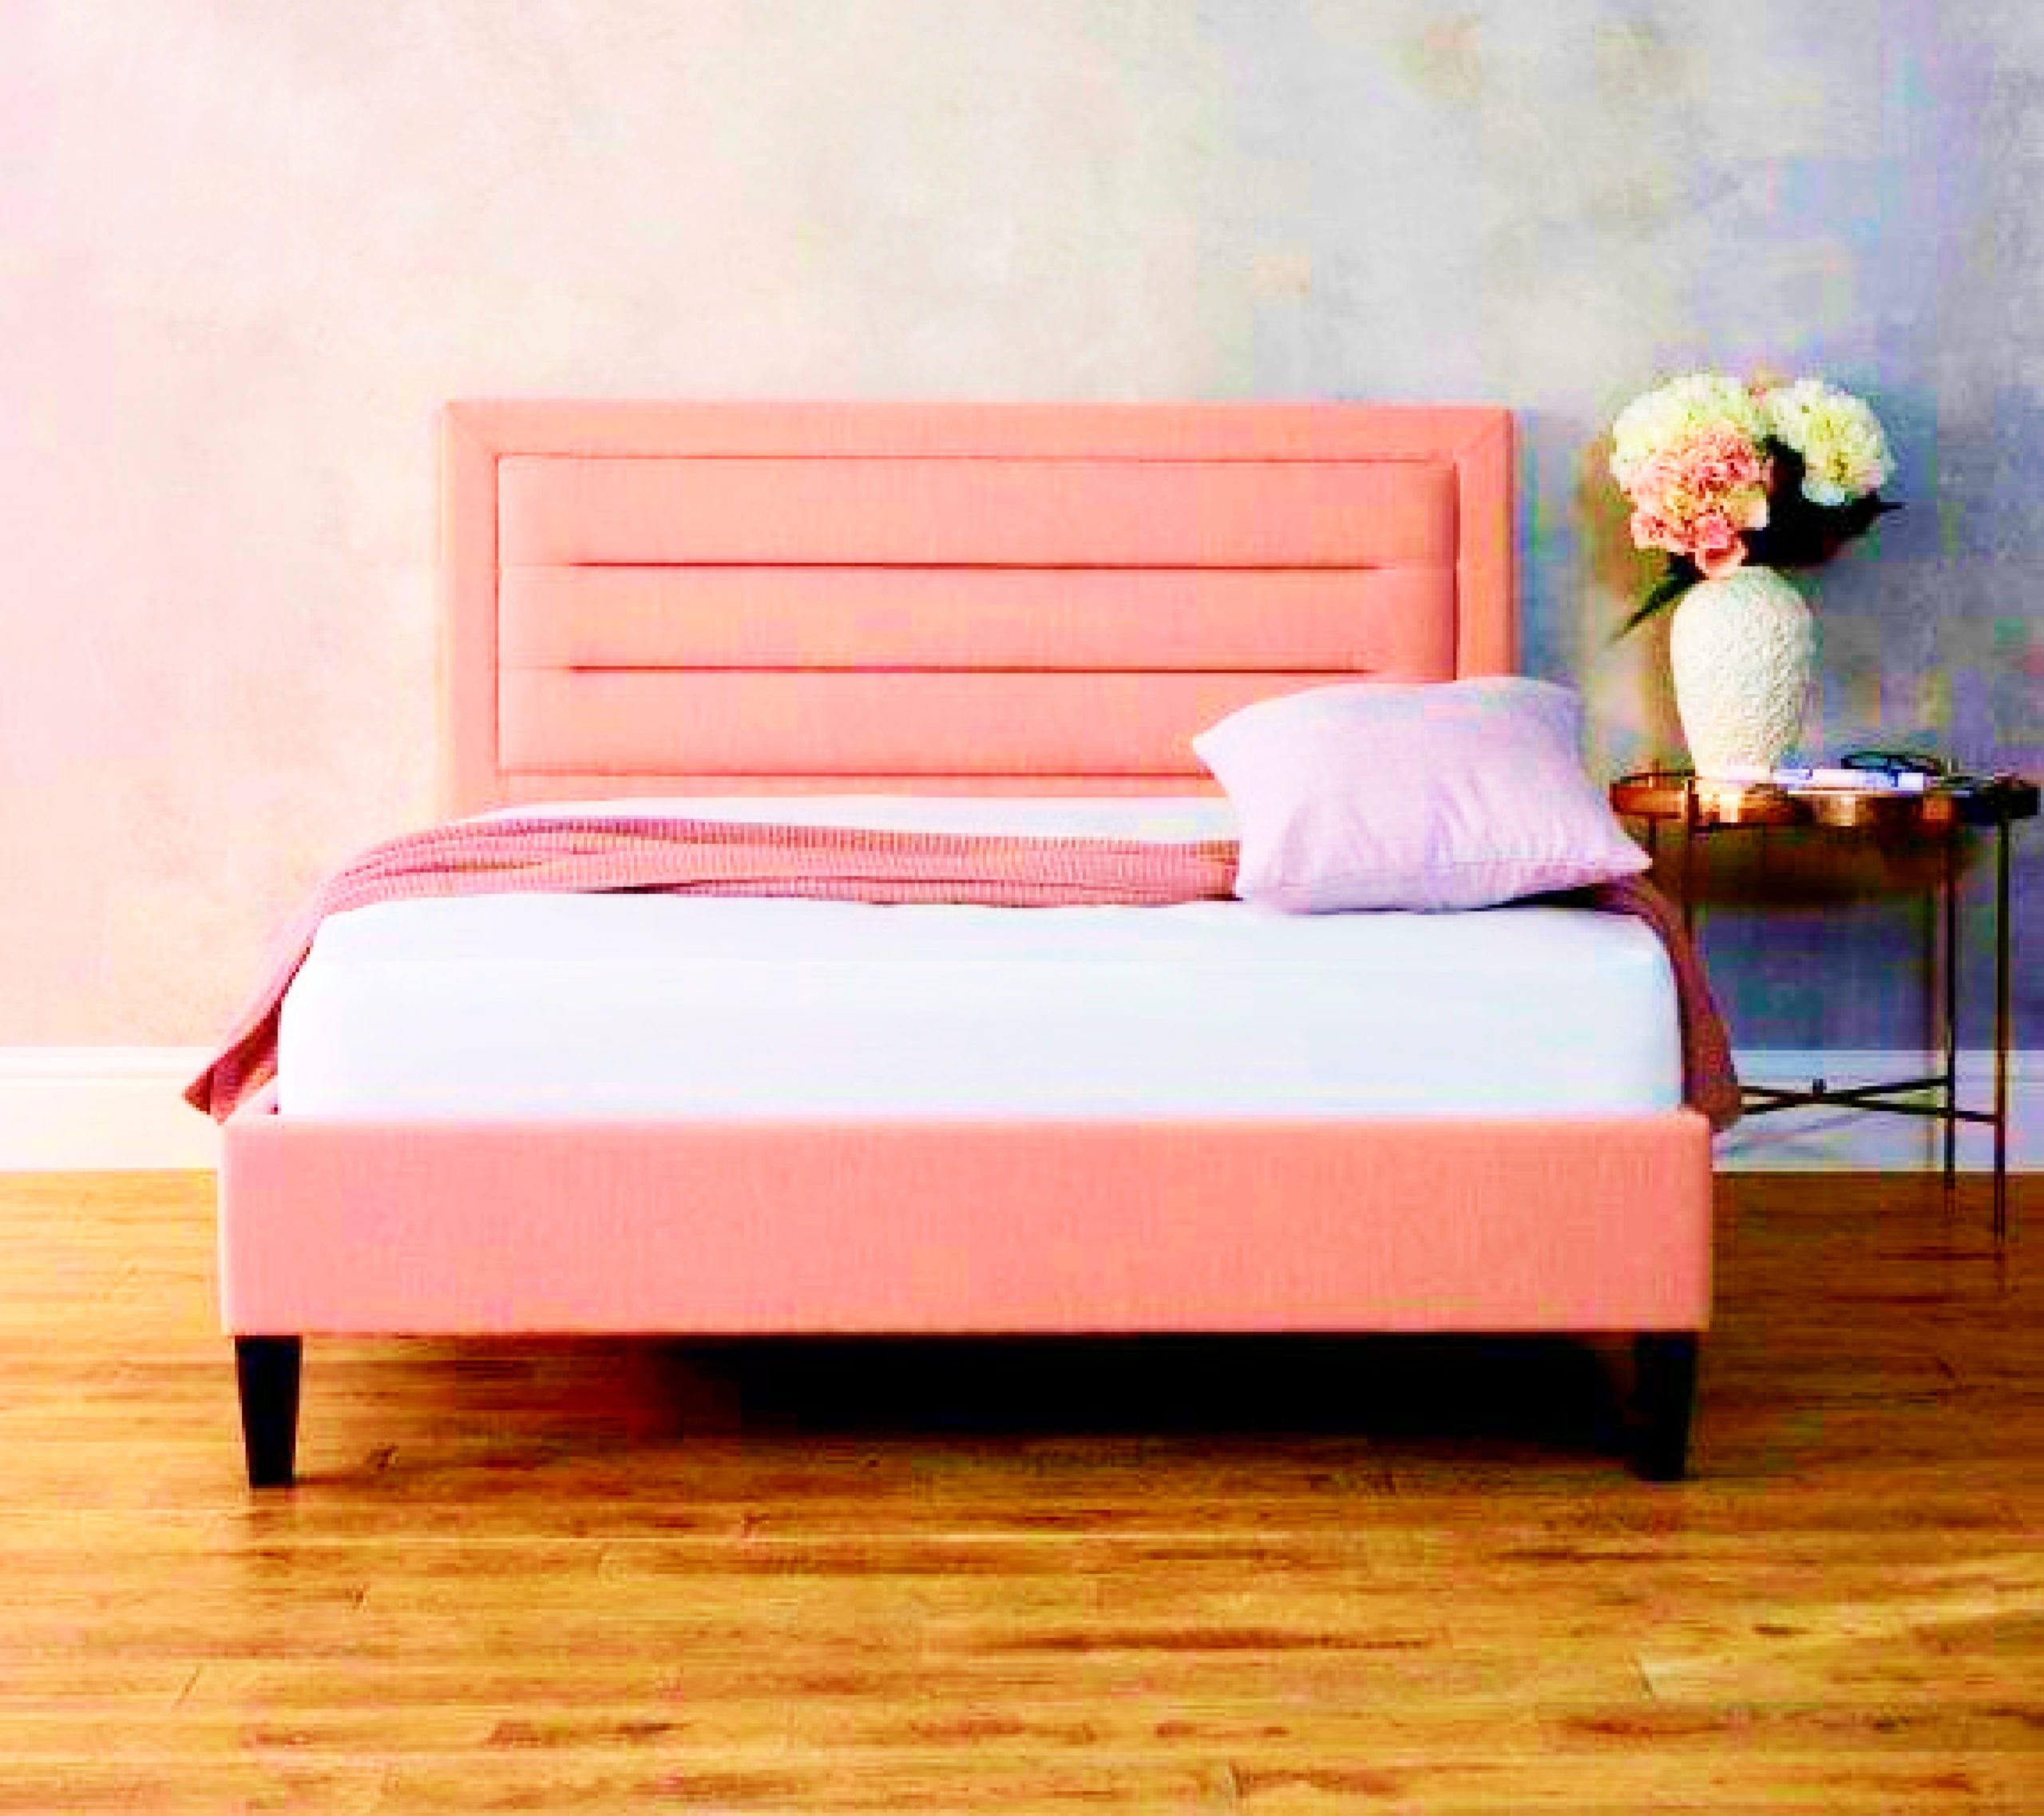 <img src="comfortable.jpg" alt="comfortable pink headboard for bed"/> 